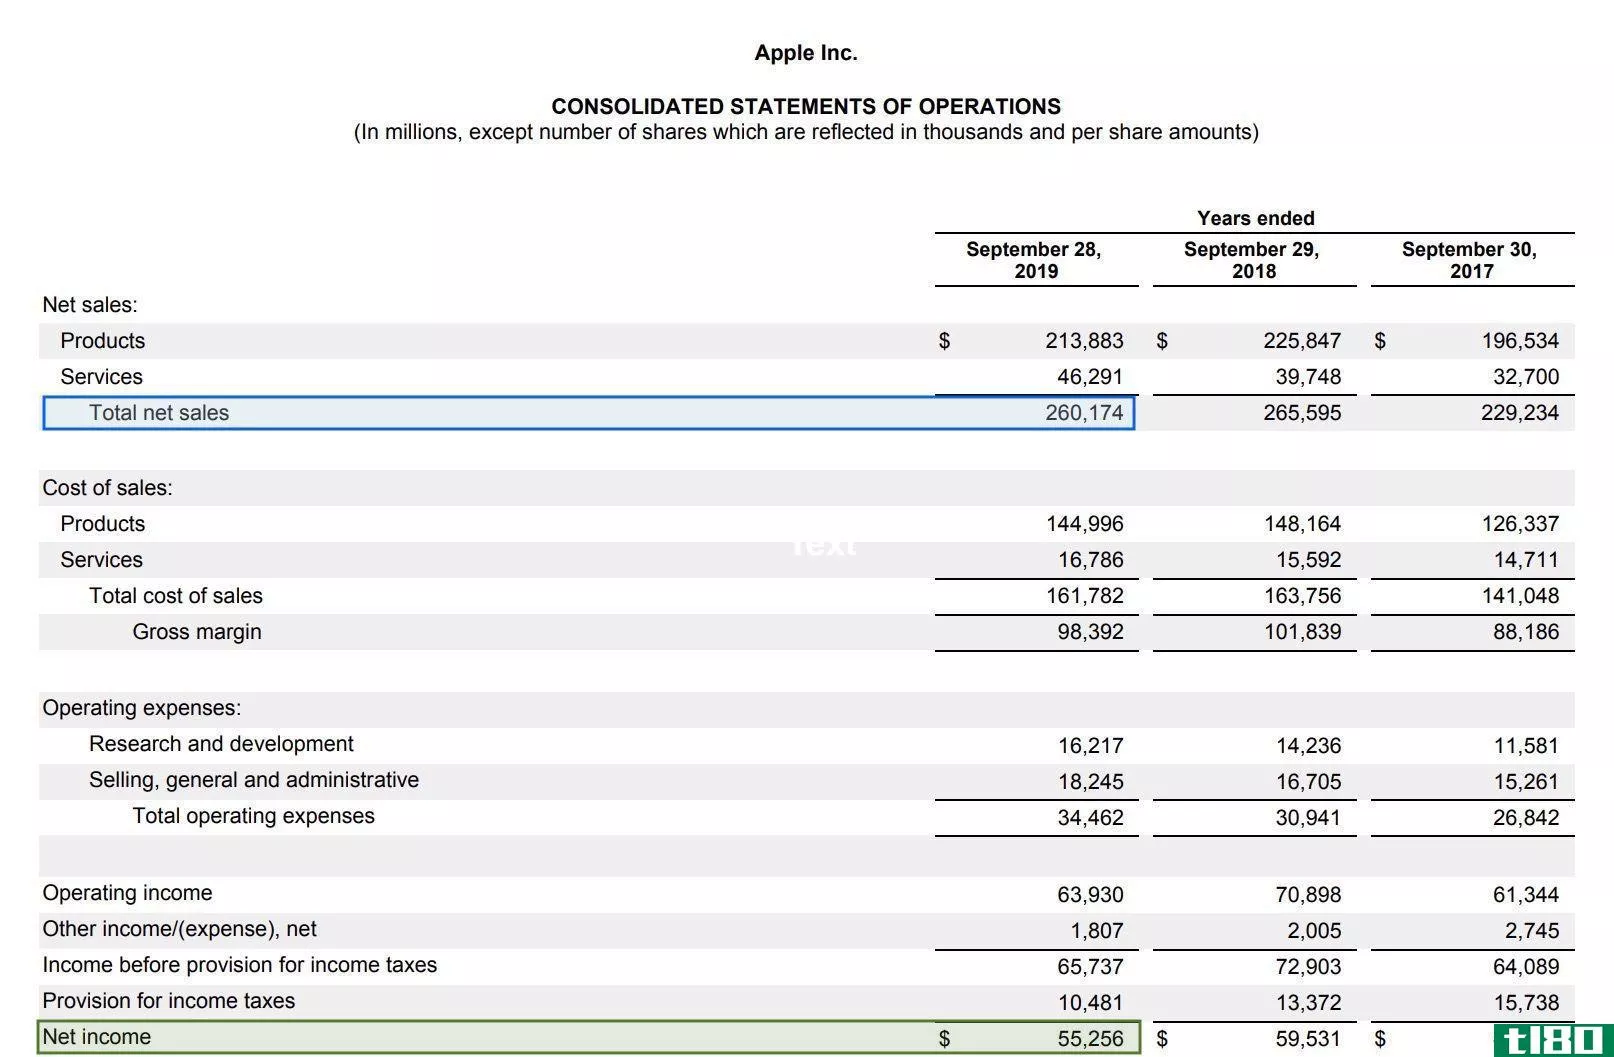 Return on revenue example using Apple Inc. income statement